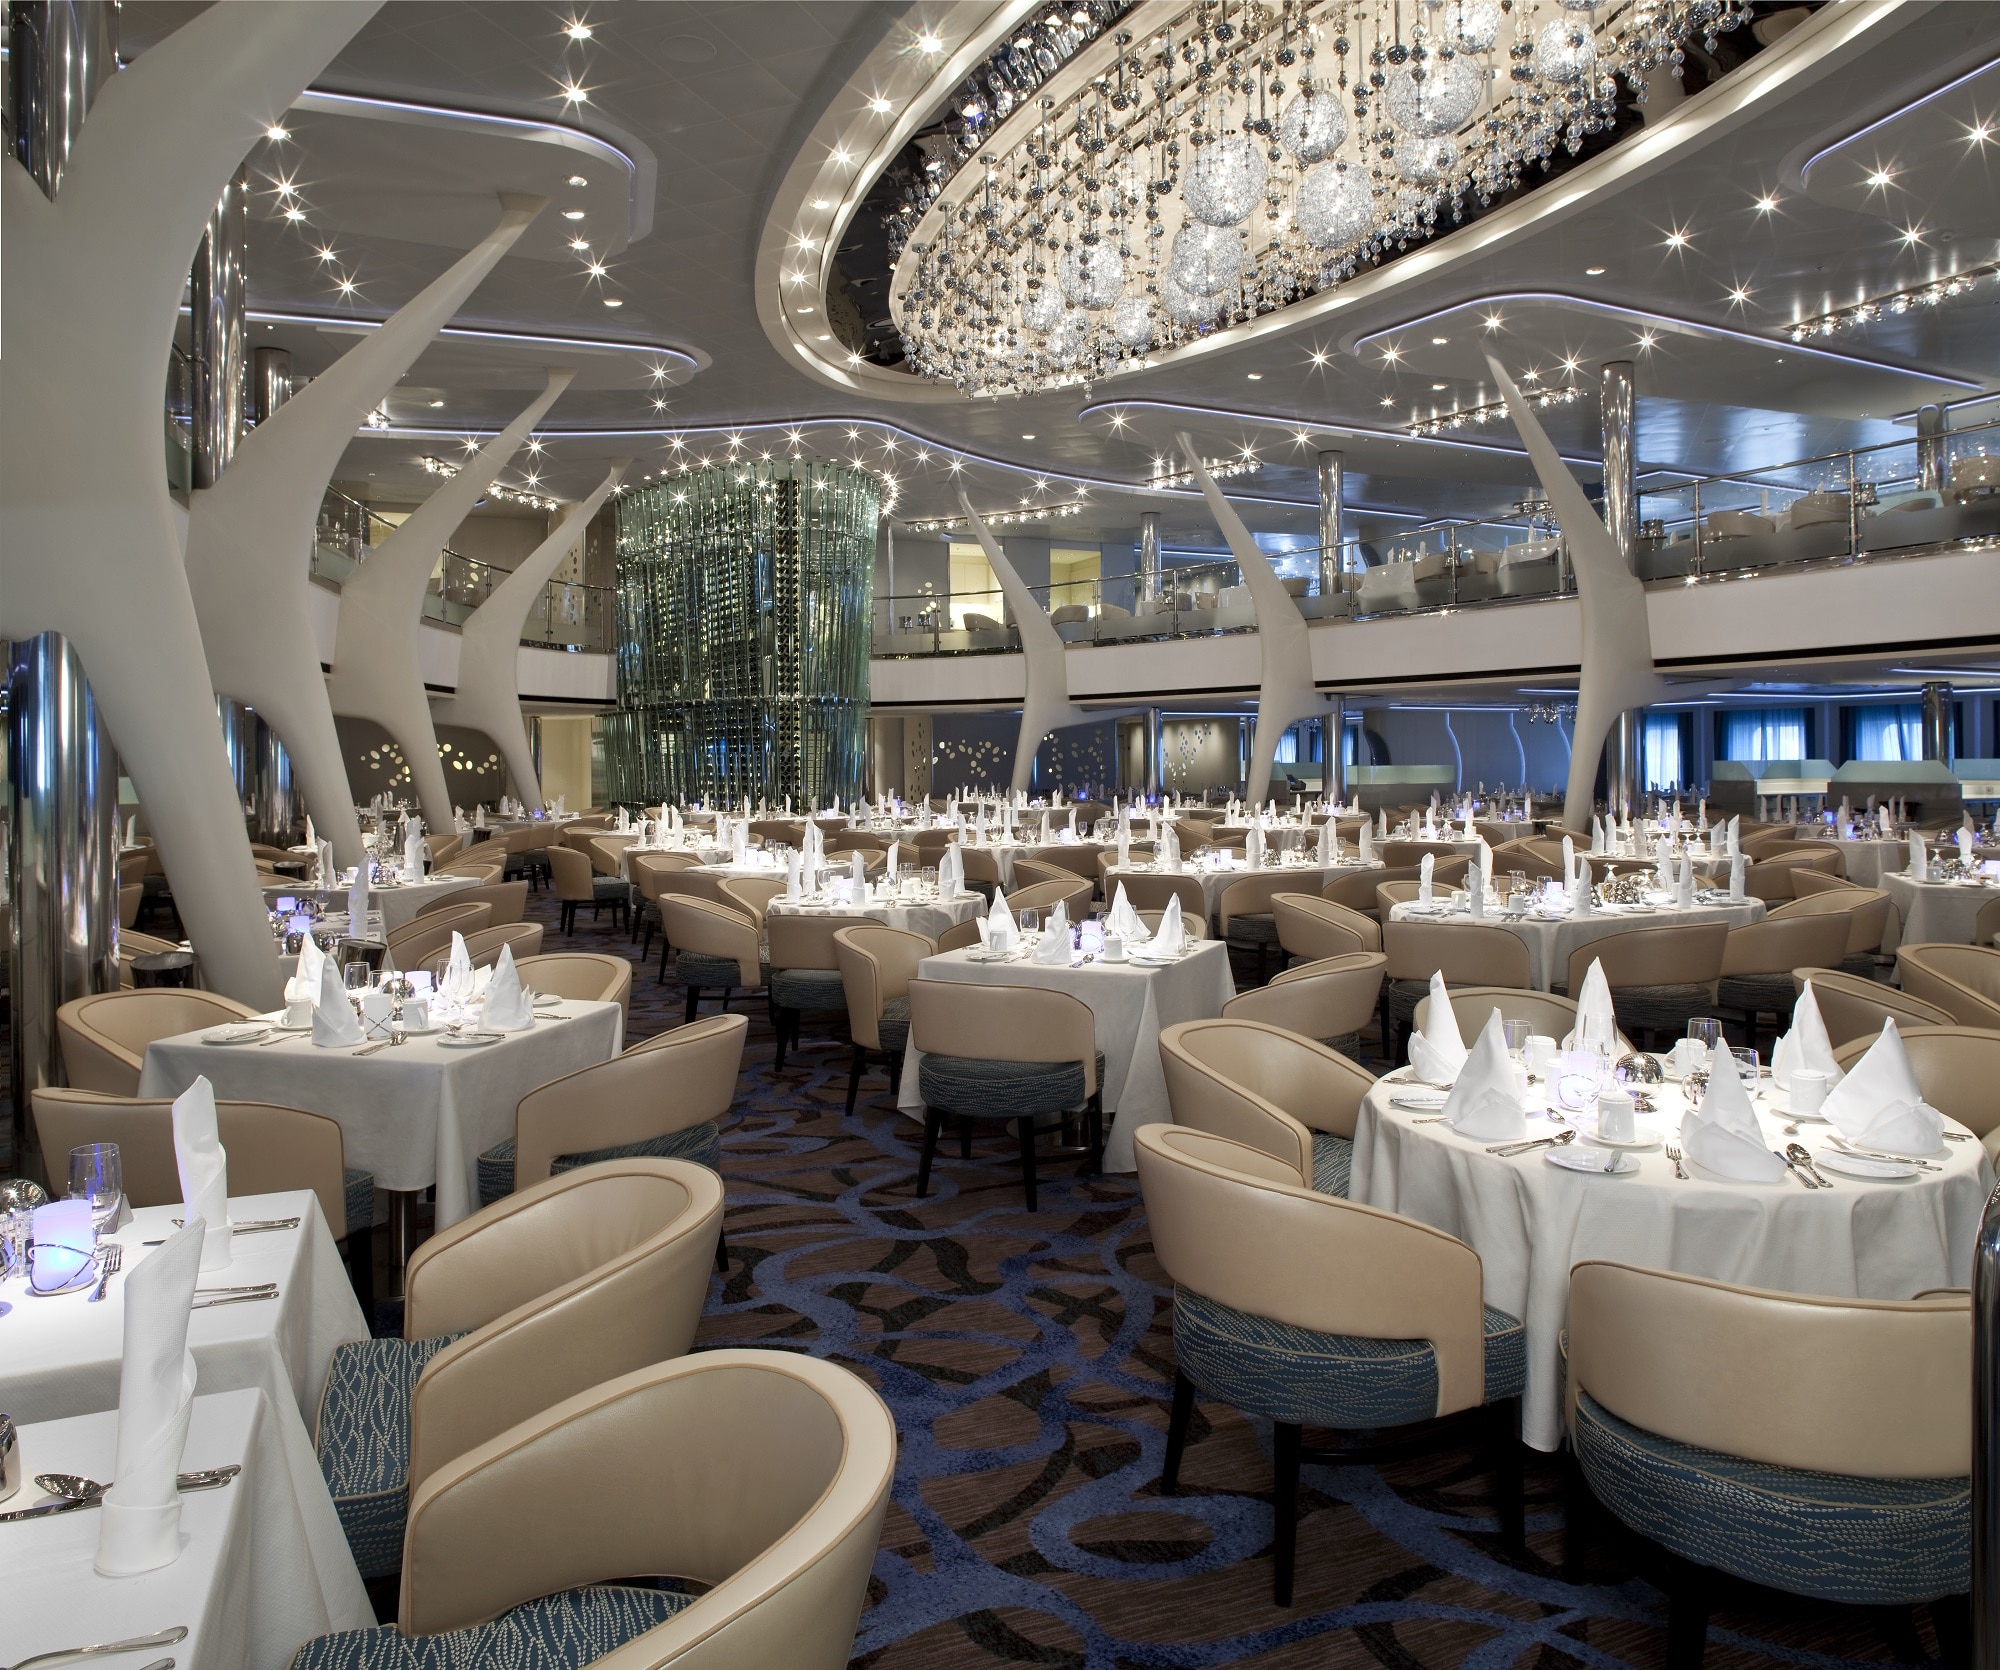 Cruiseschip-Celebrity Eclipse-Celebrity Cruises-Restaurant Moonlight Sonata